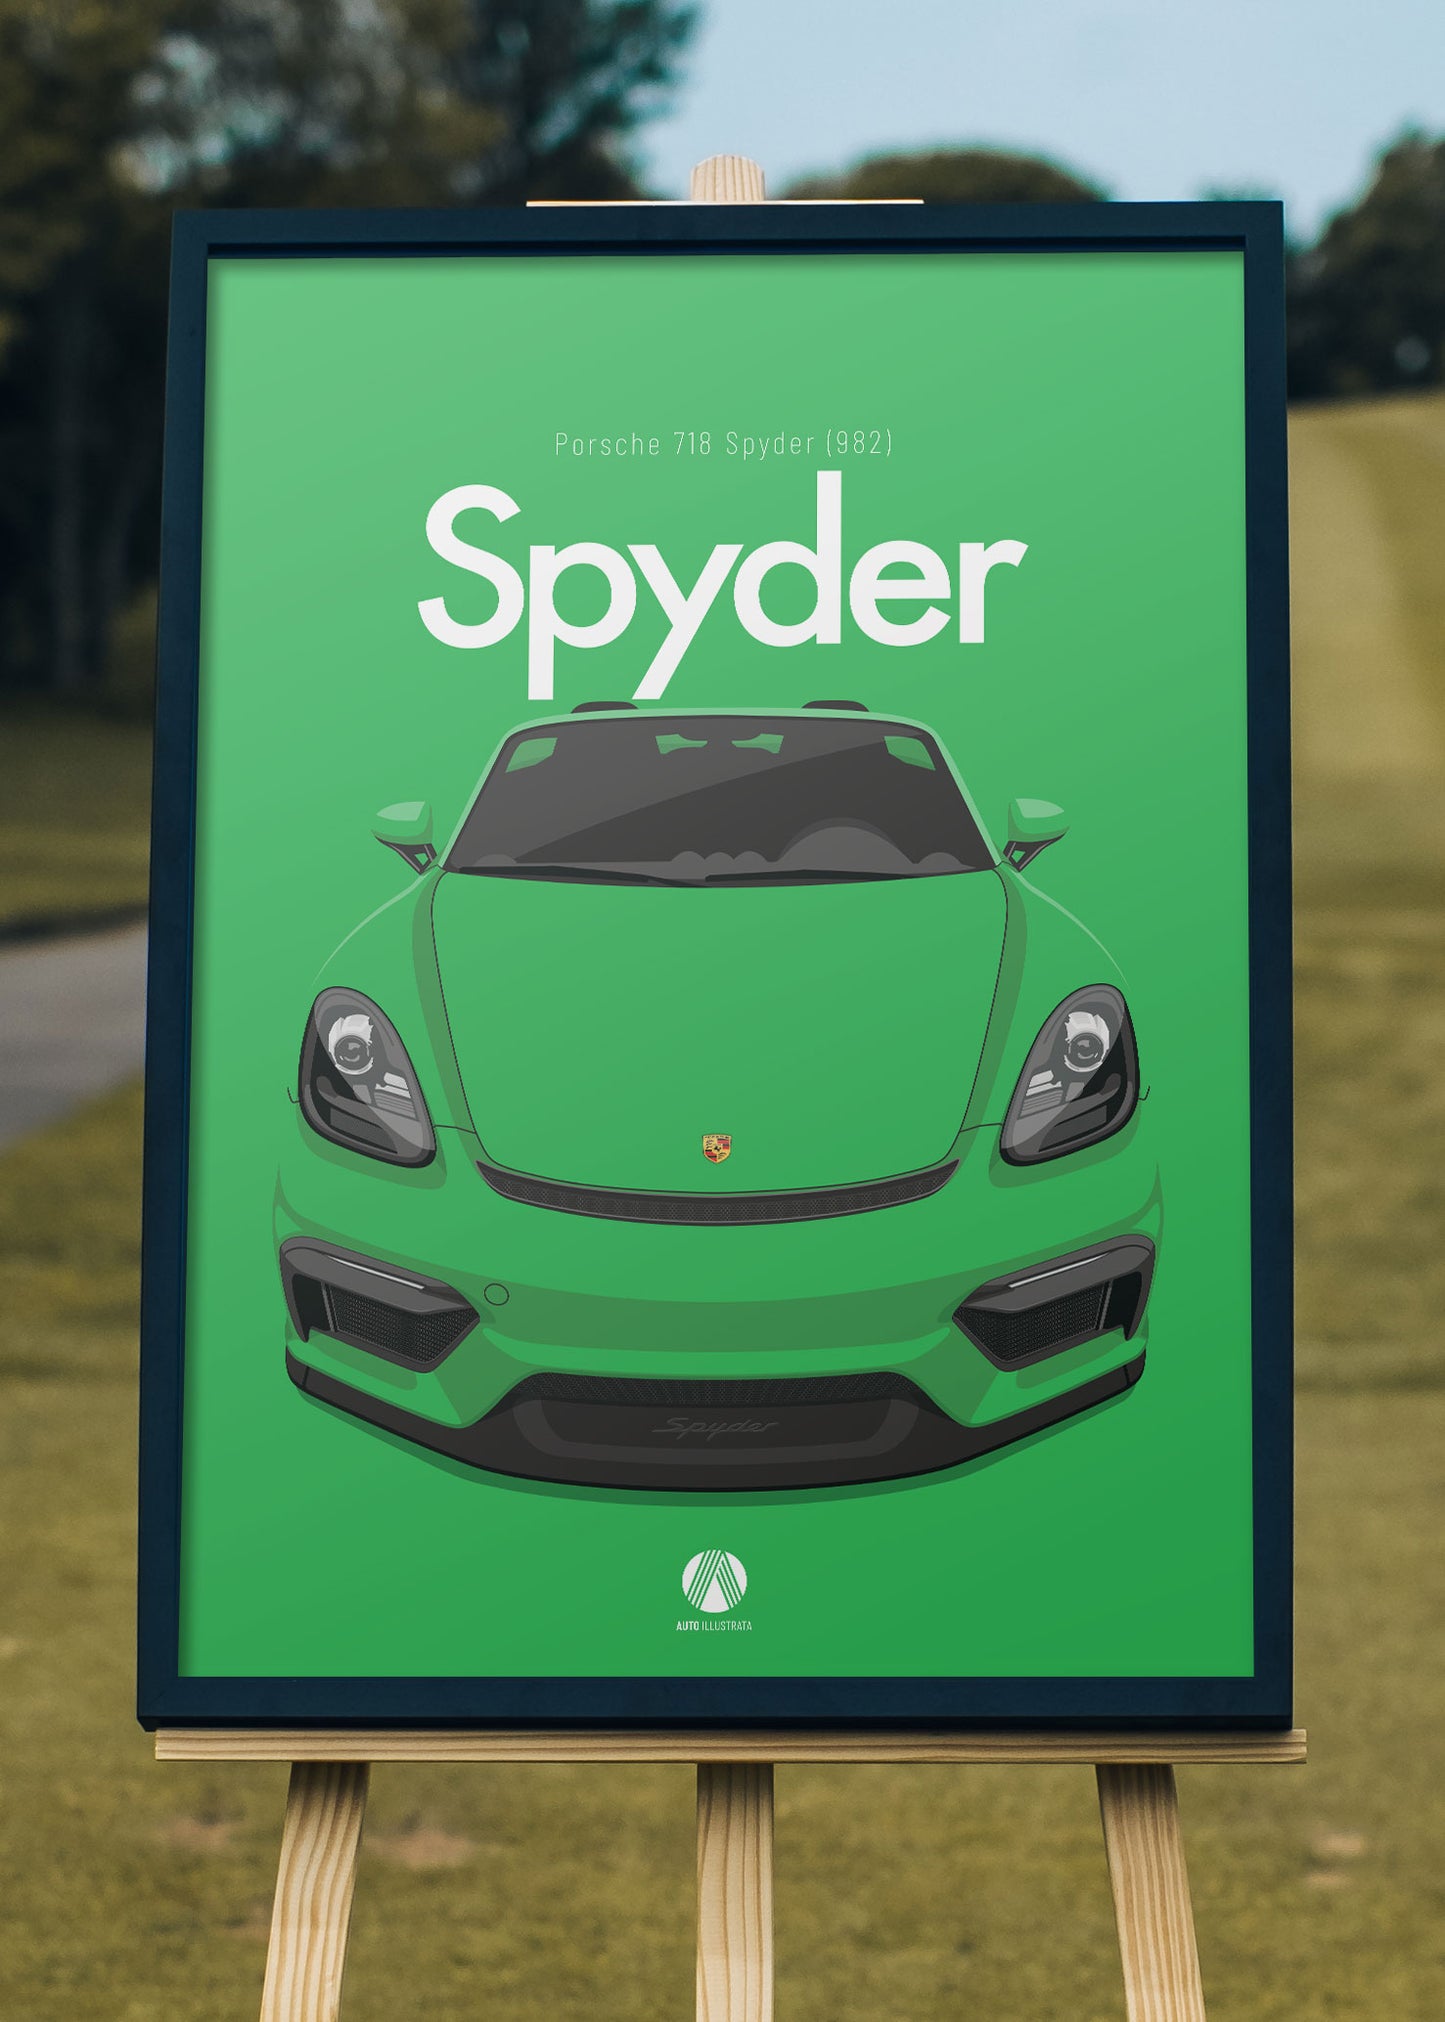 2020 Porsche 718 Spyder (982) - Python Green - poster print